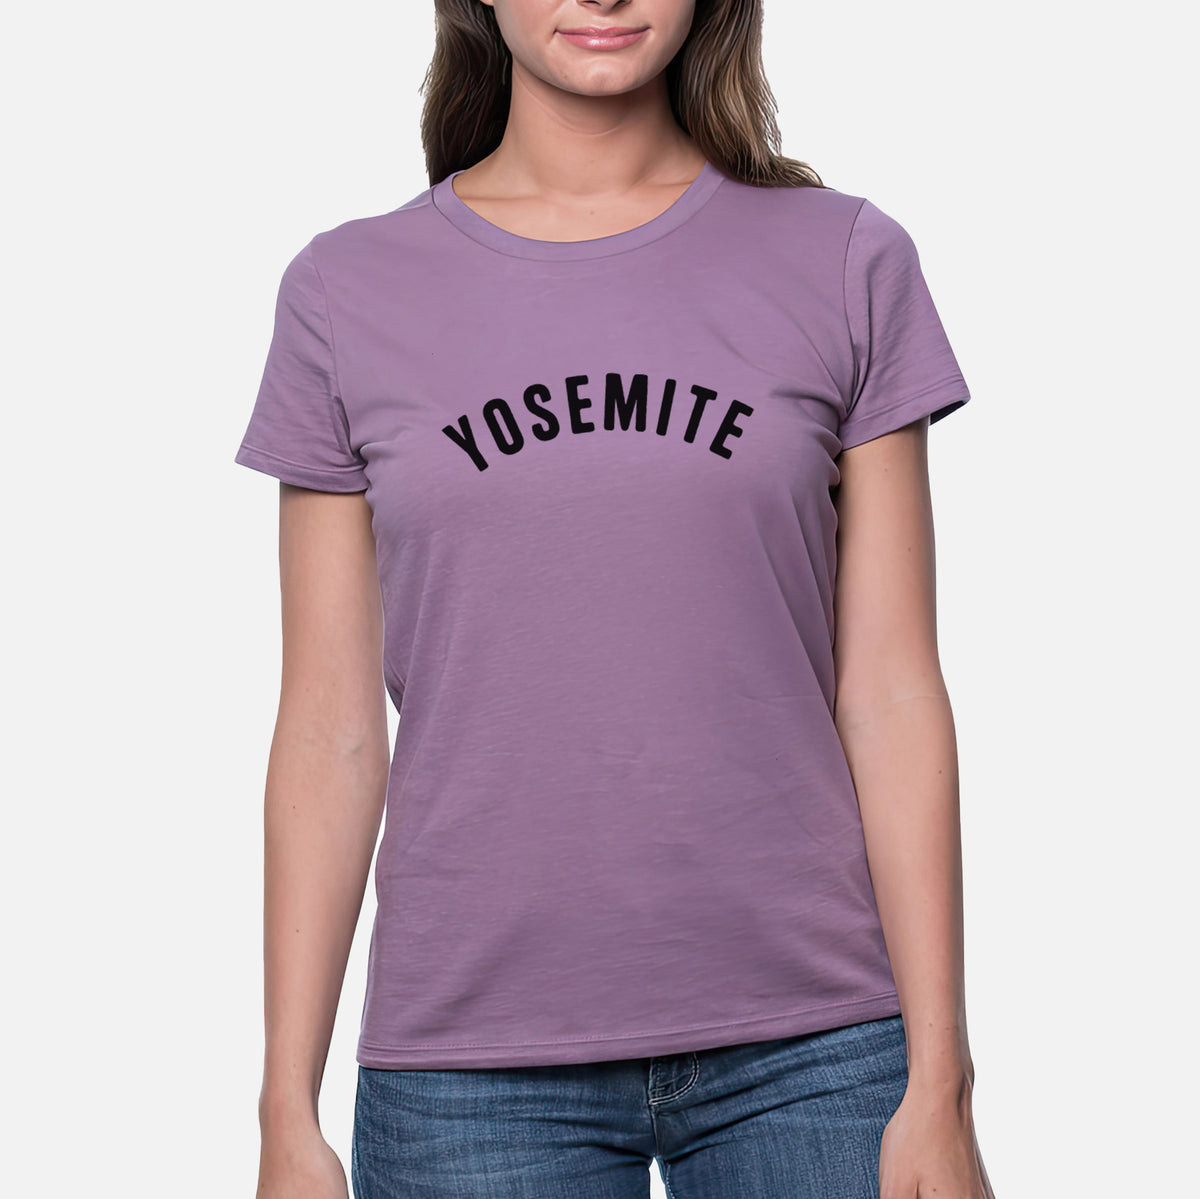 Yosemite - Women&#39;s Crewneck - Made in USA - 100% Organic Cotton